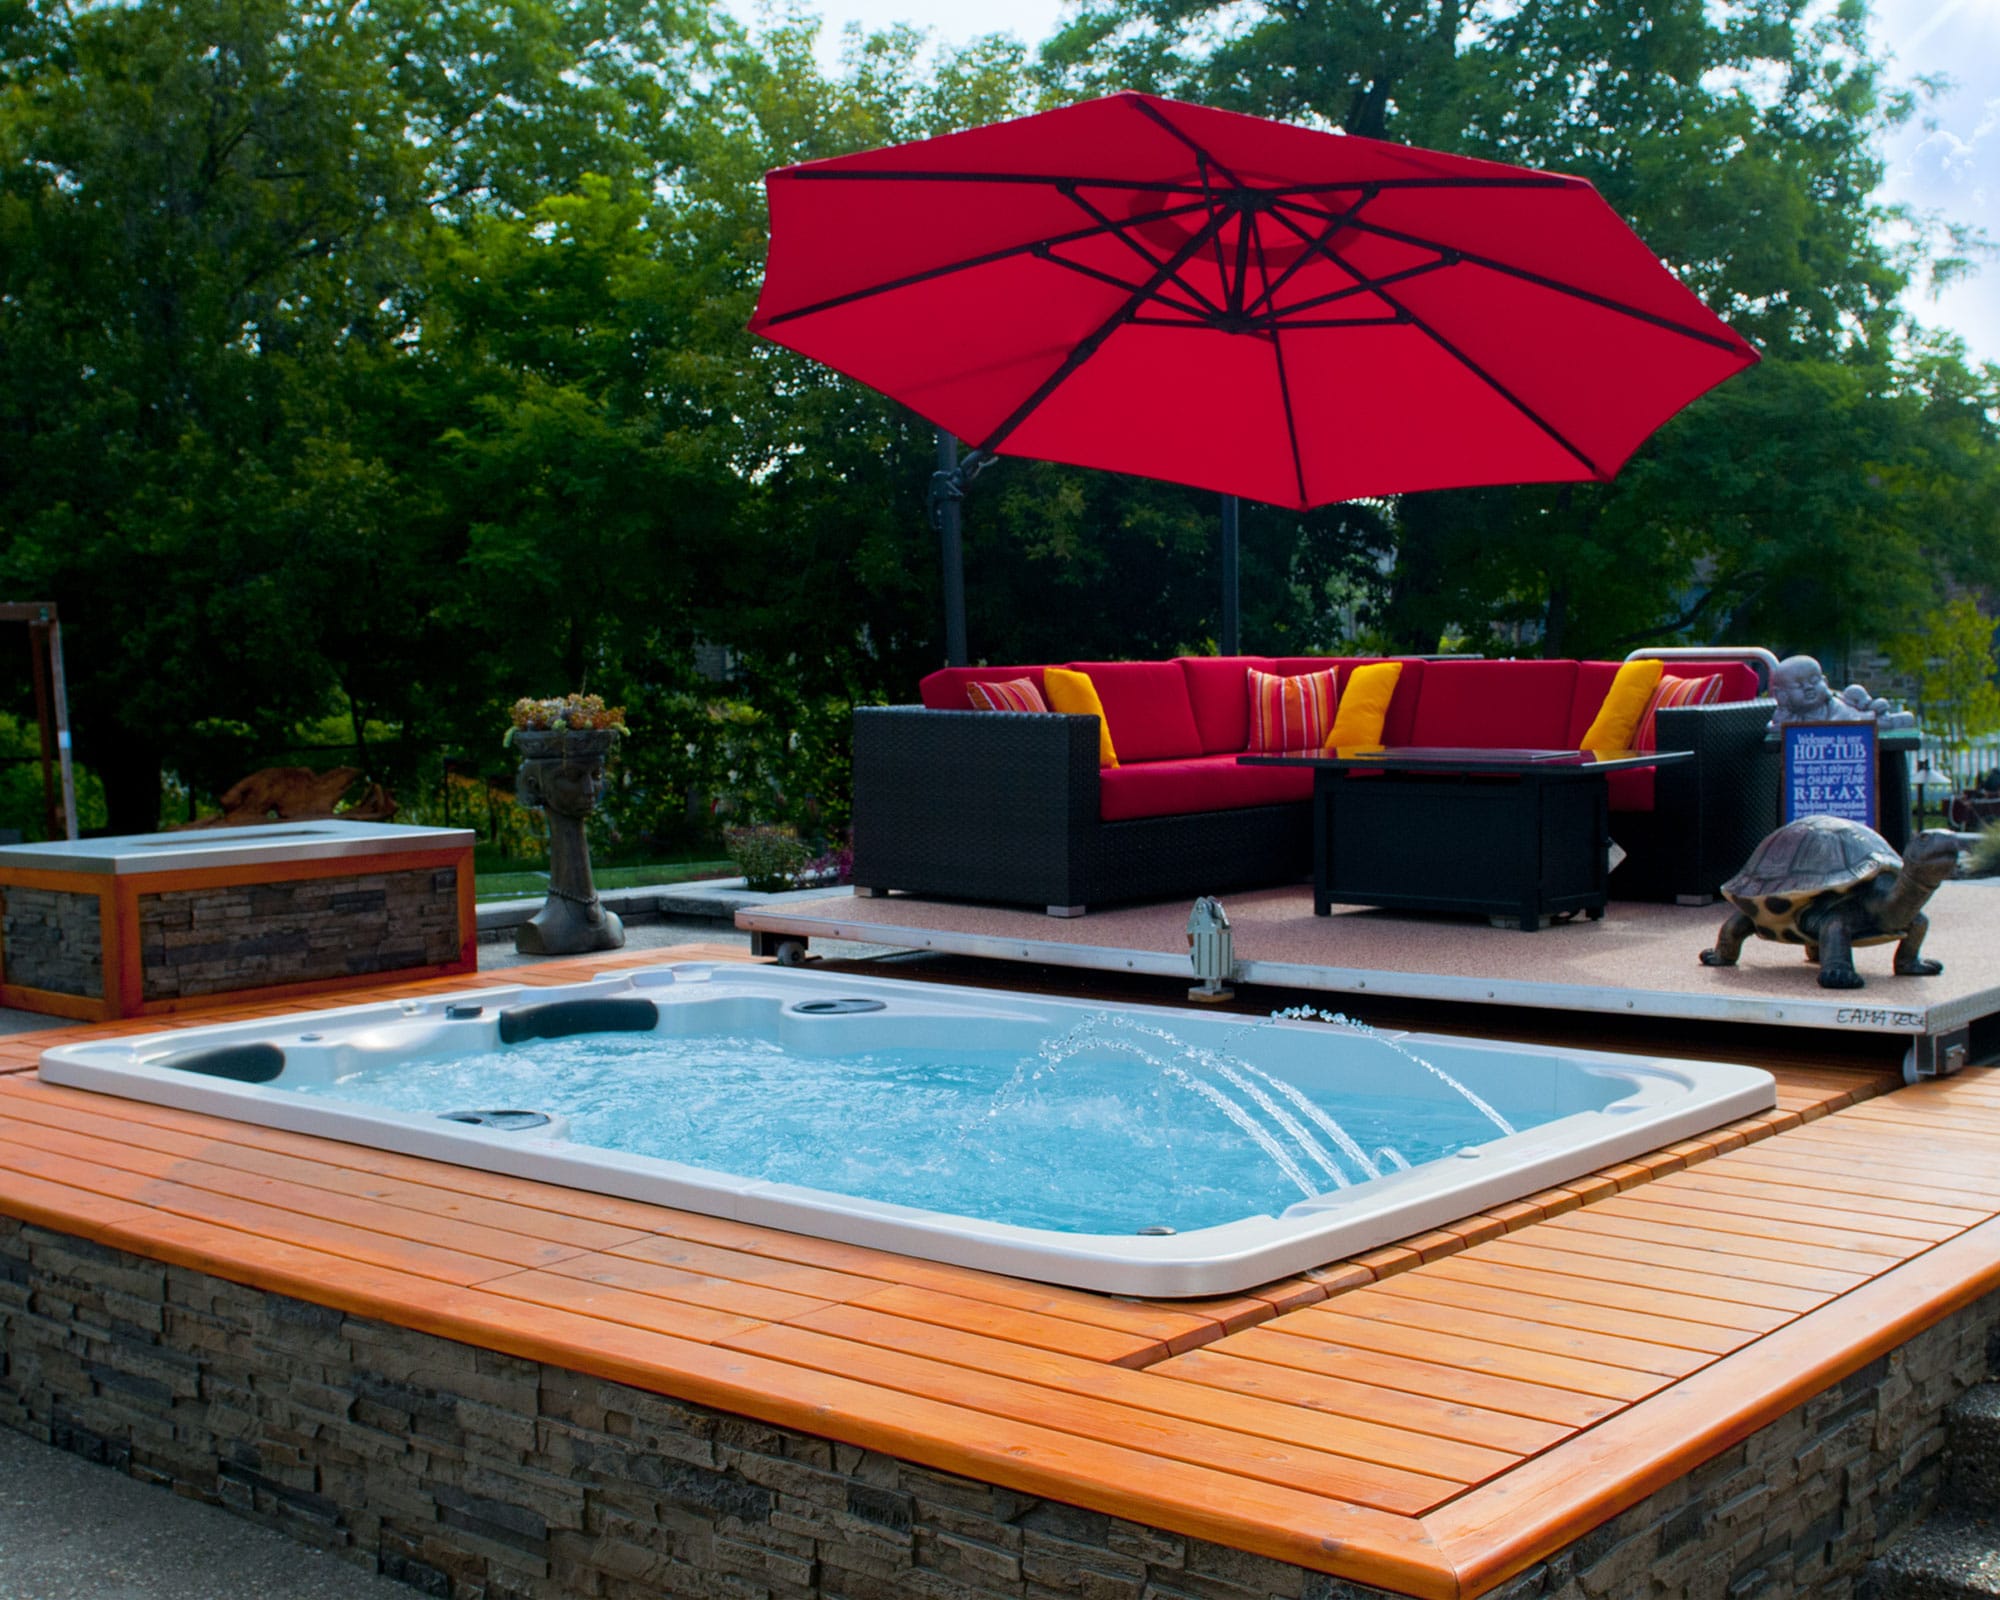 Luxury hot tub outdoors next to a sofa set